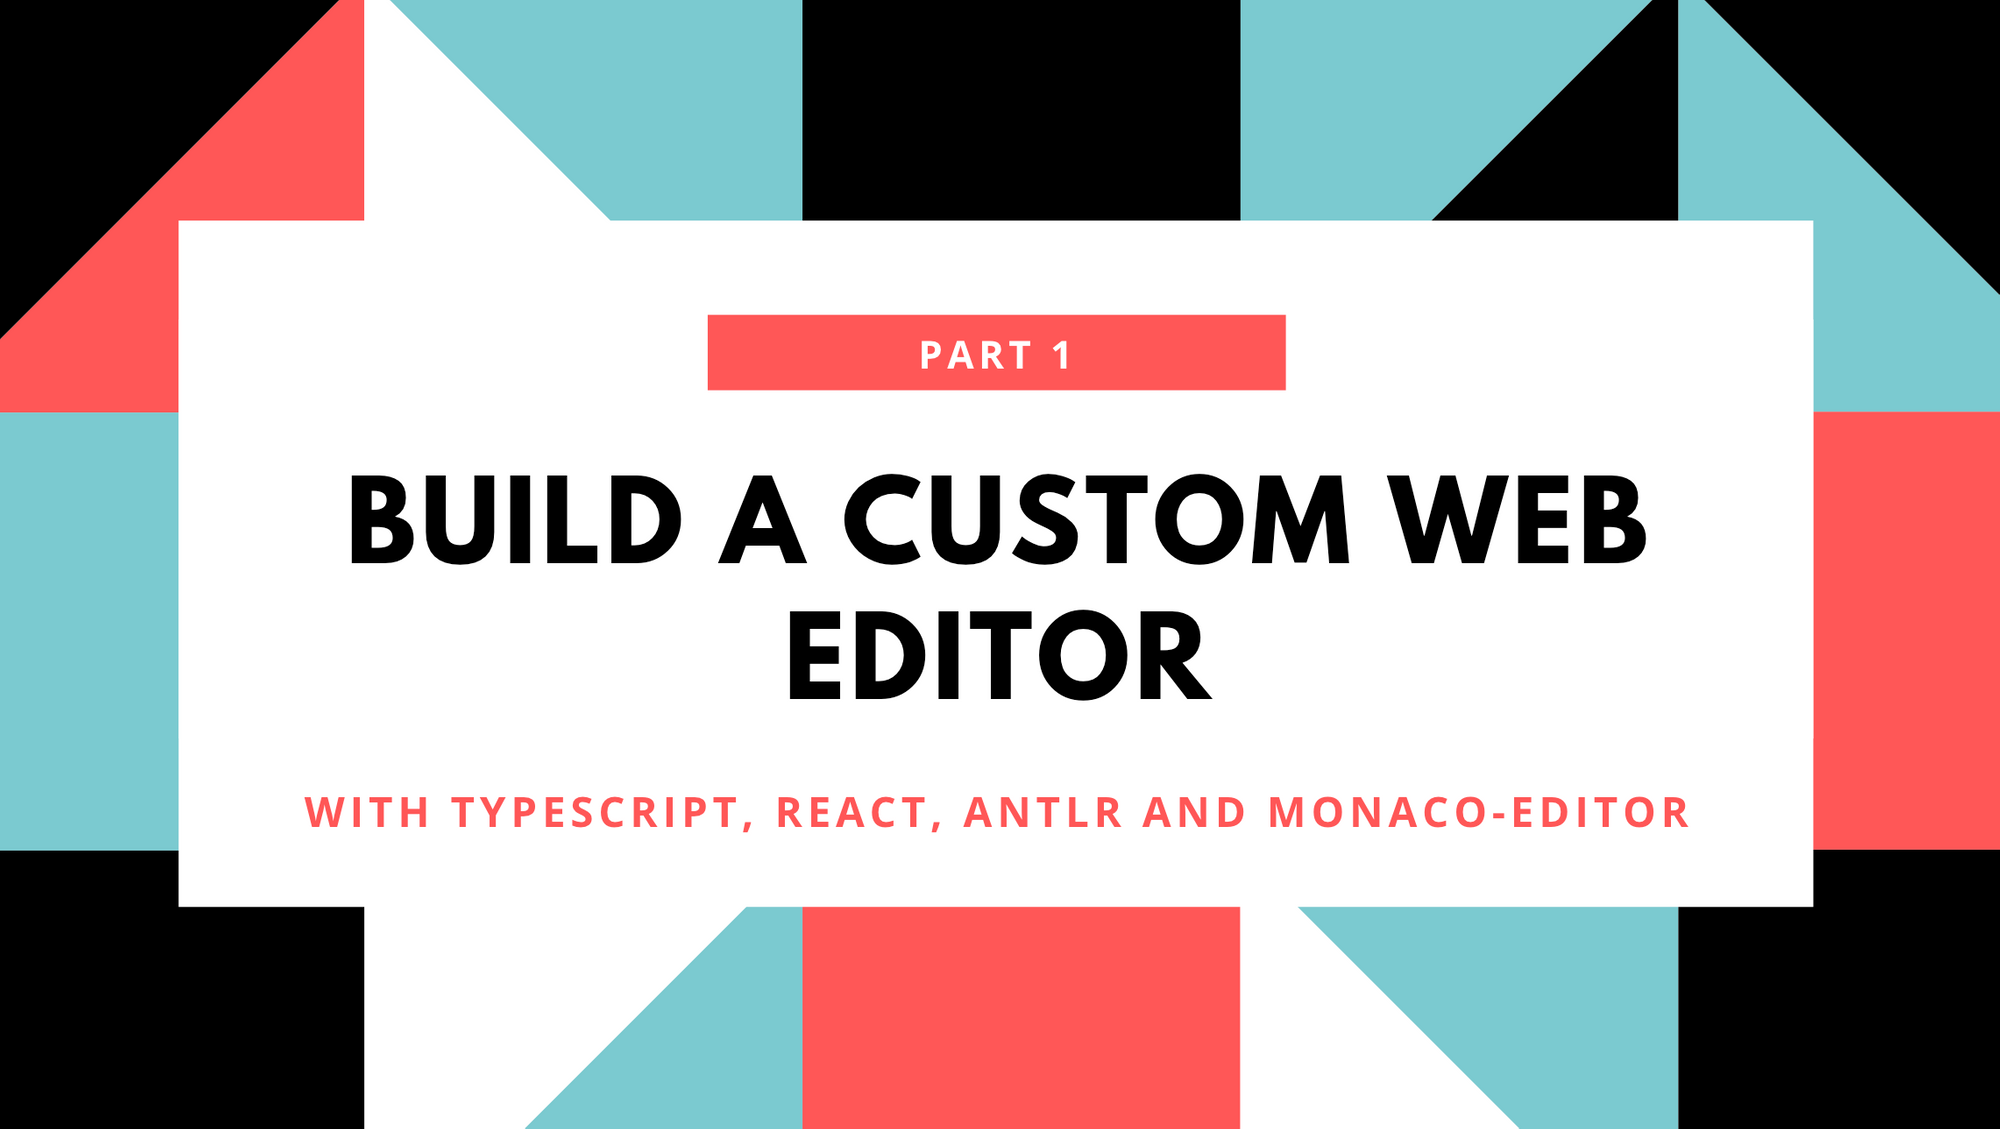 Create a custom web editor using Typescript, React, ANTLR and Monaco-Editor